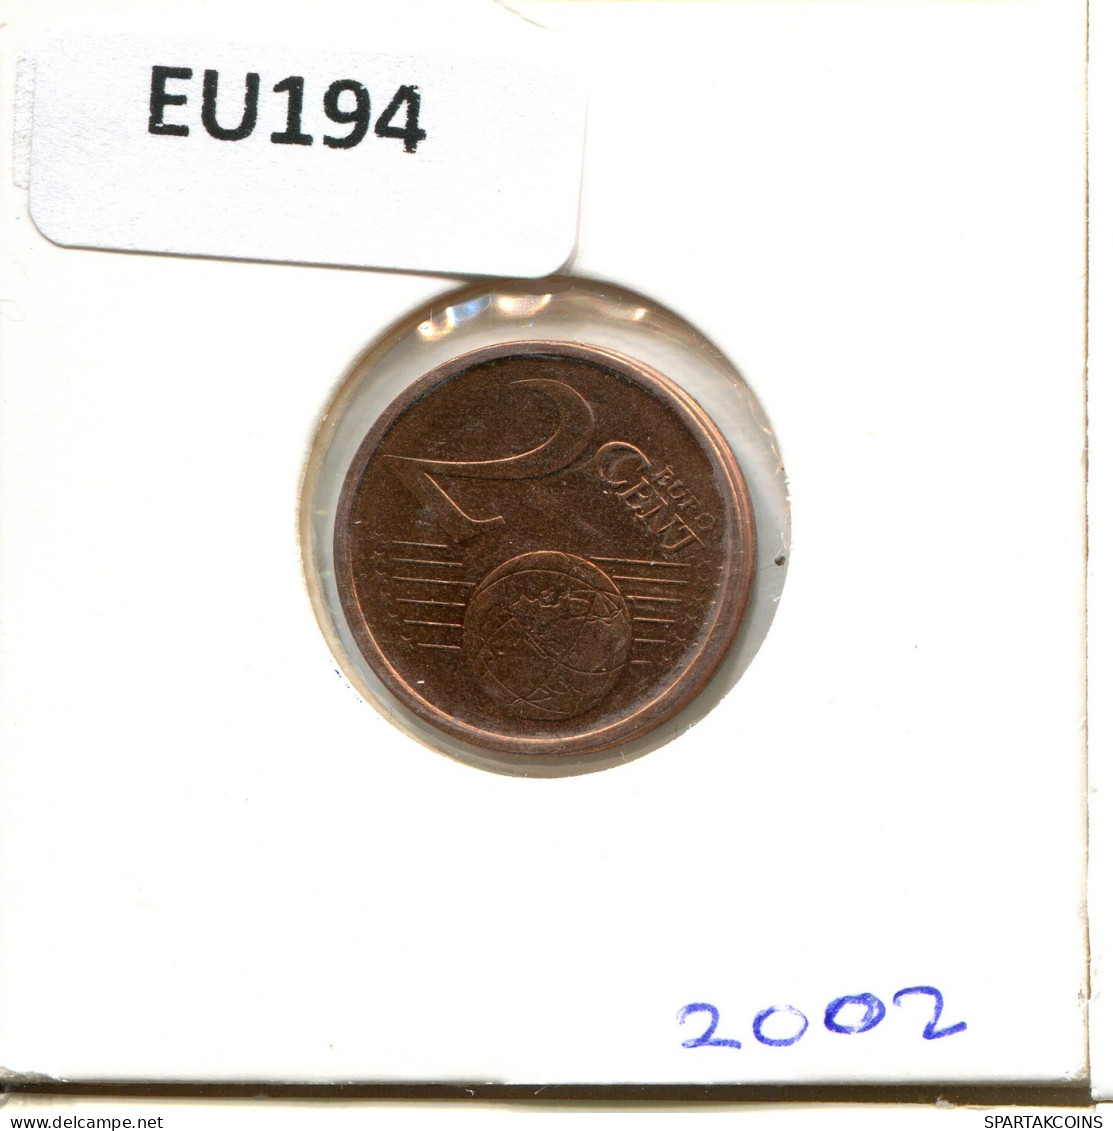 2 EURO CENTS 2002 IRLAND IRELAND Münze #EU194.D - Irland